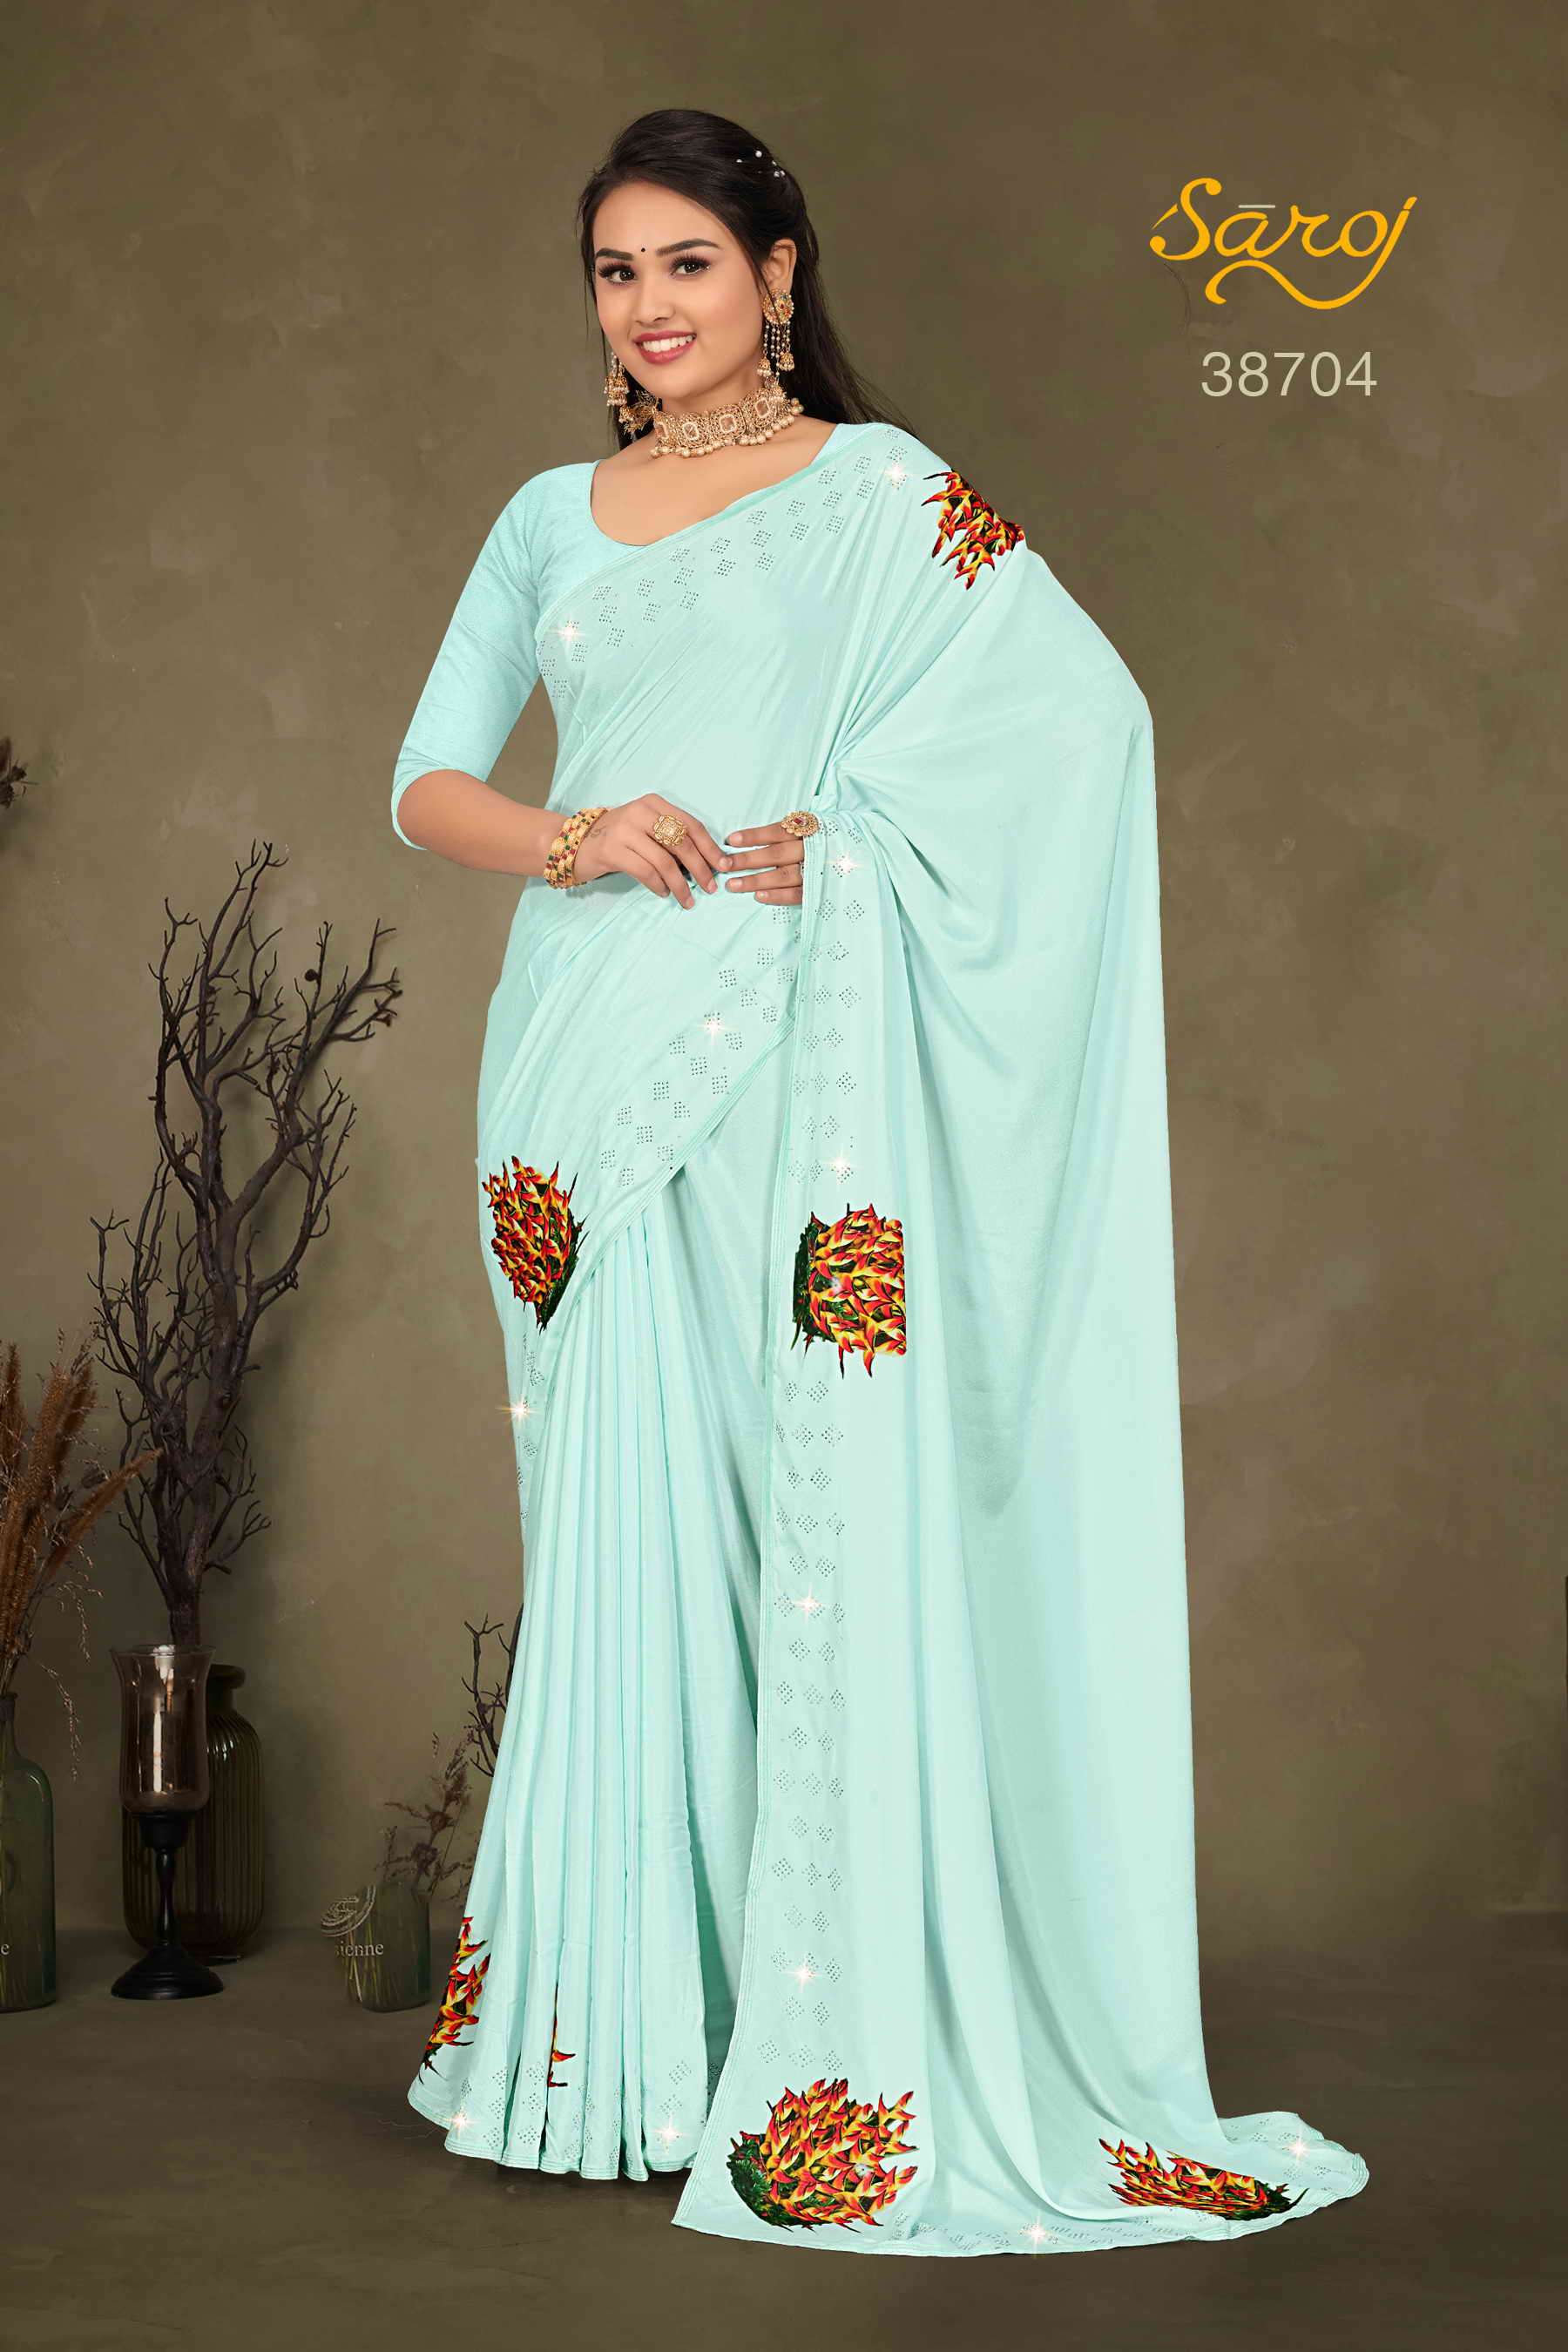 Saroj textile presents Tanmayi Designer sarees catalogue